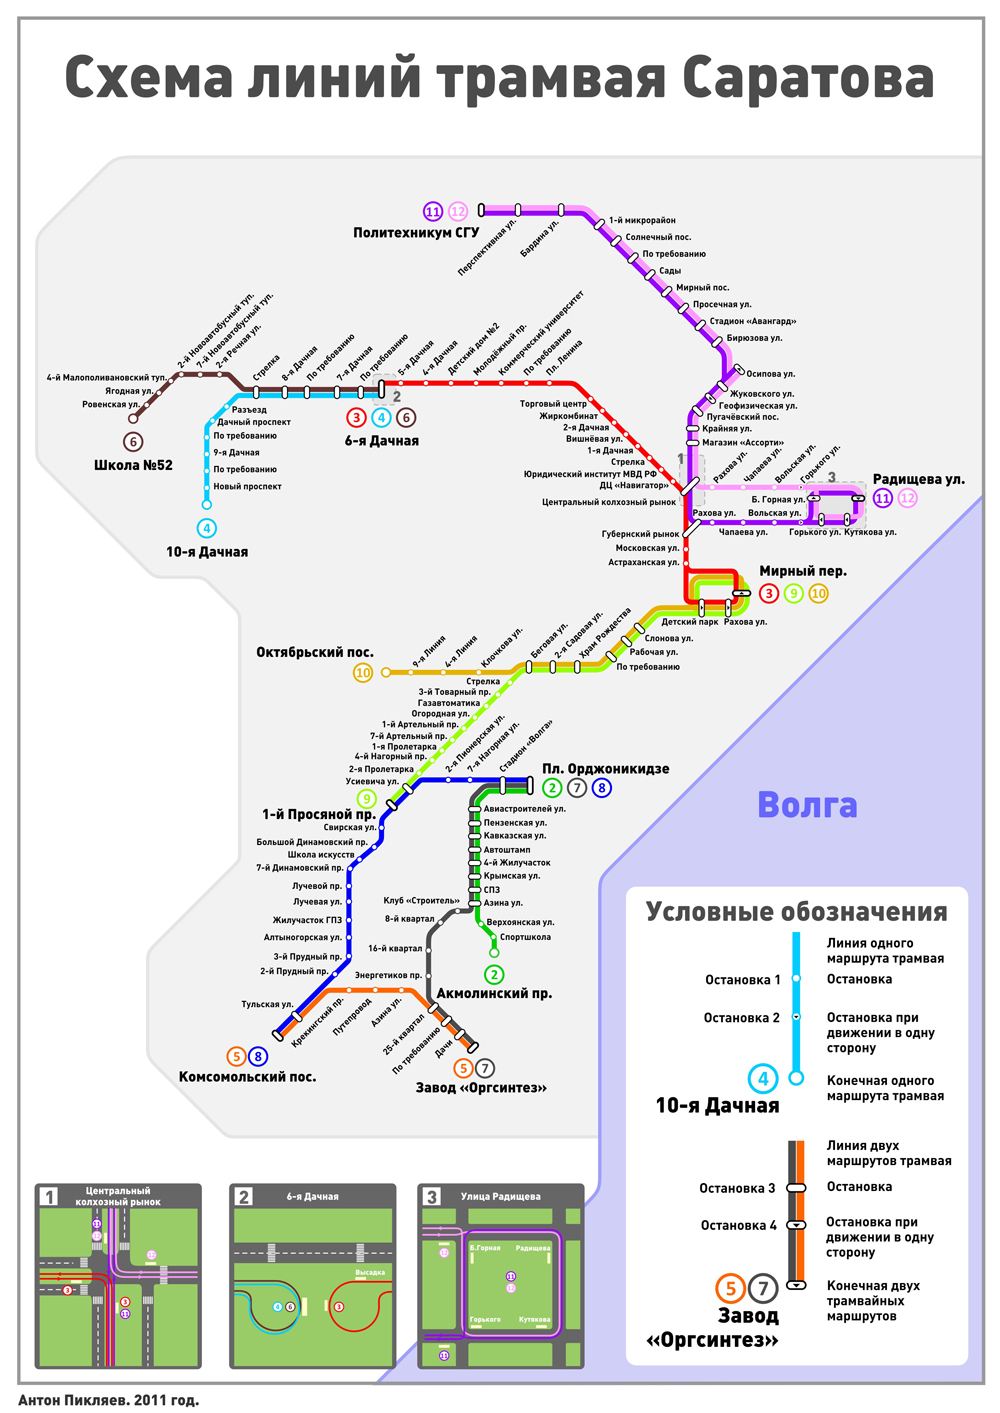 map of saratov